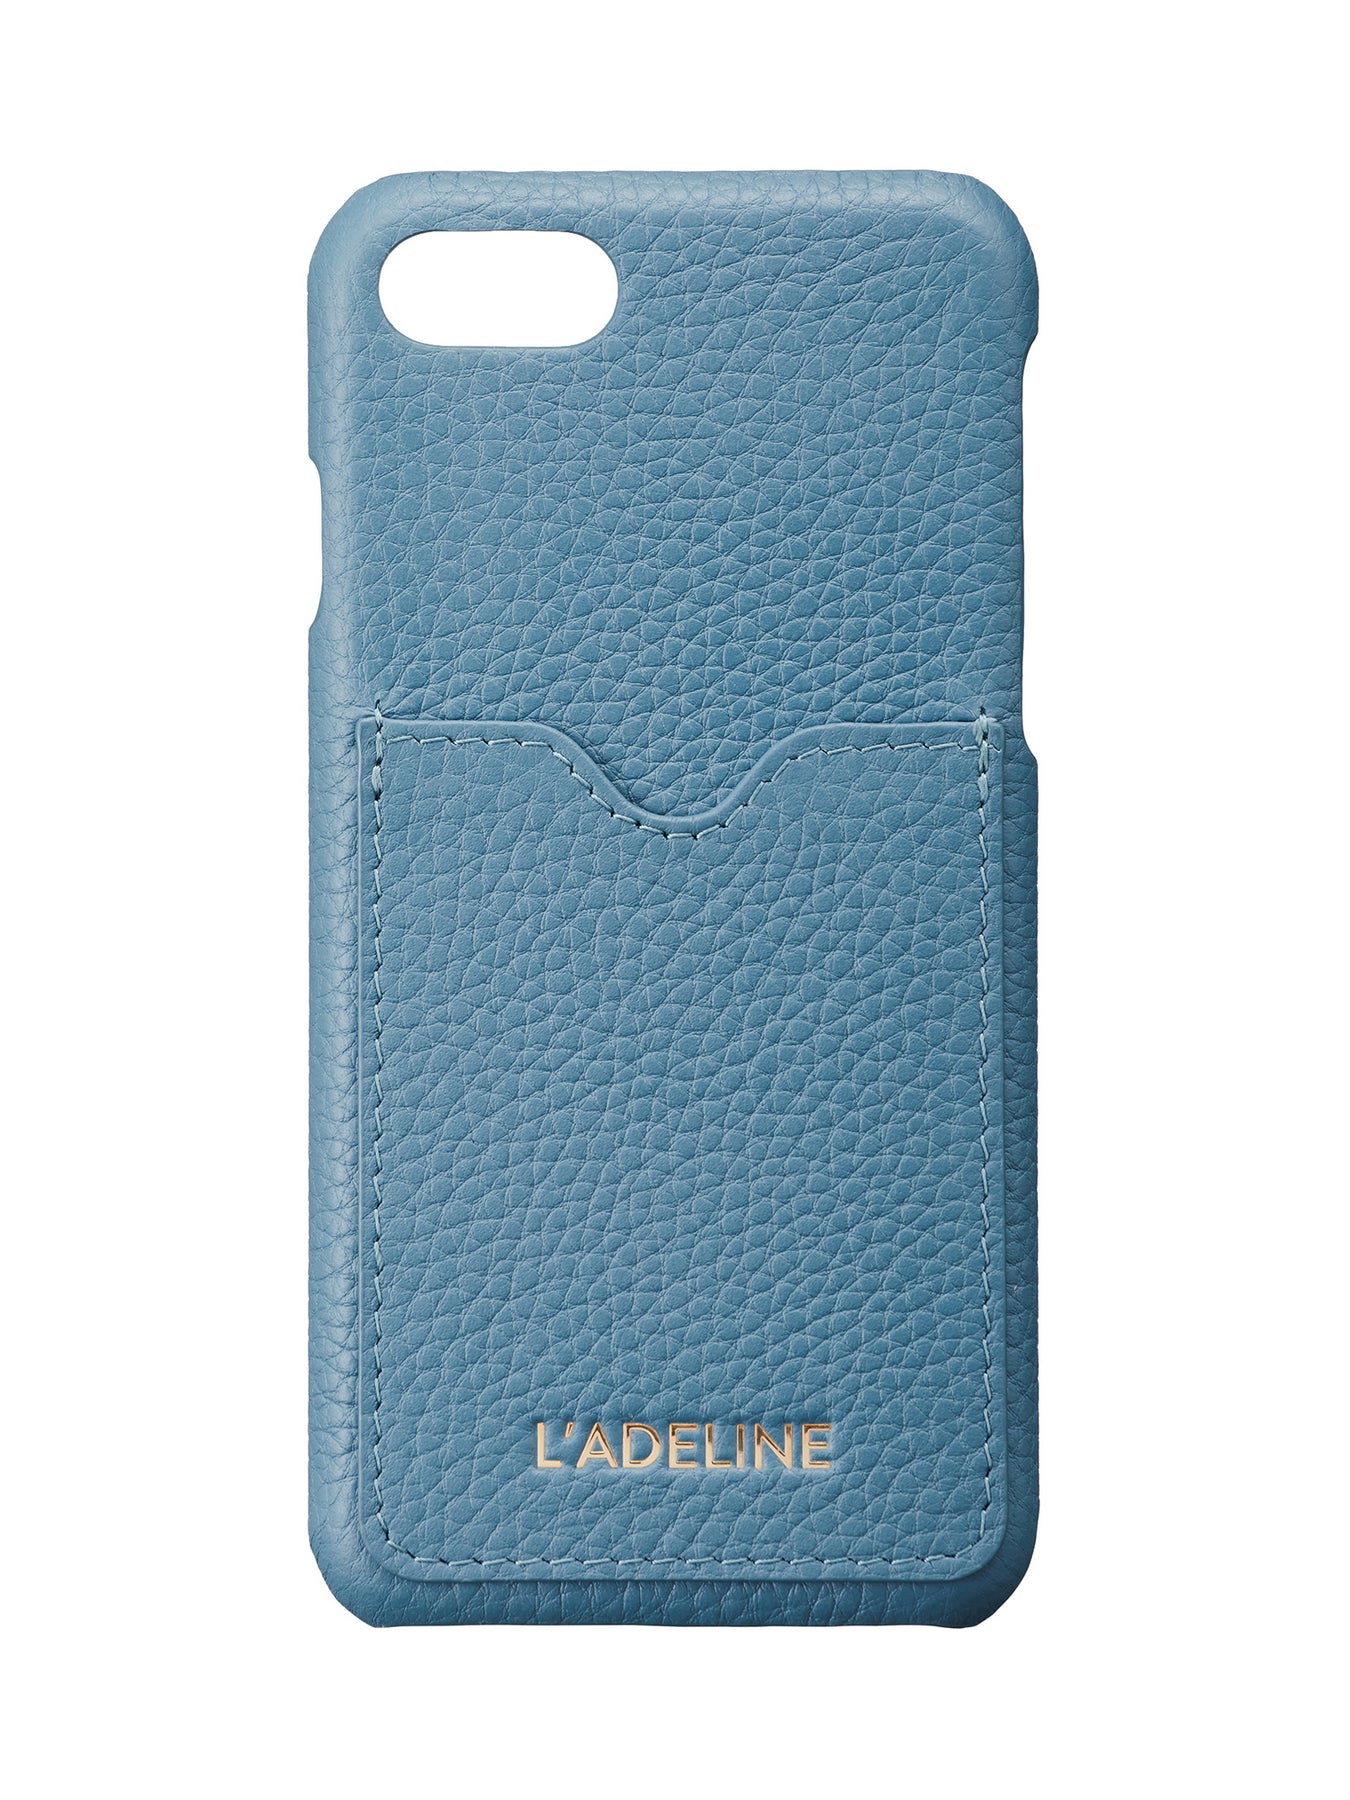 iPhone7/8 Case – L'ADELINE Shop